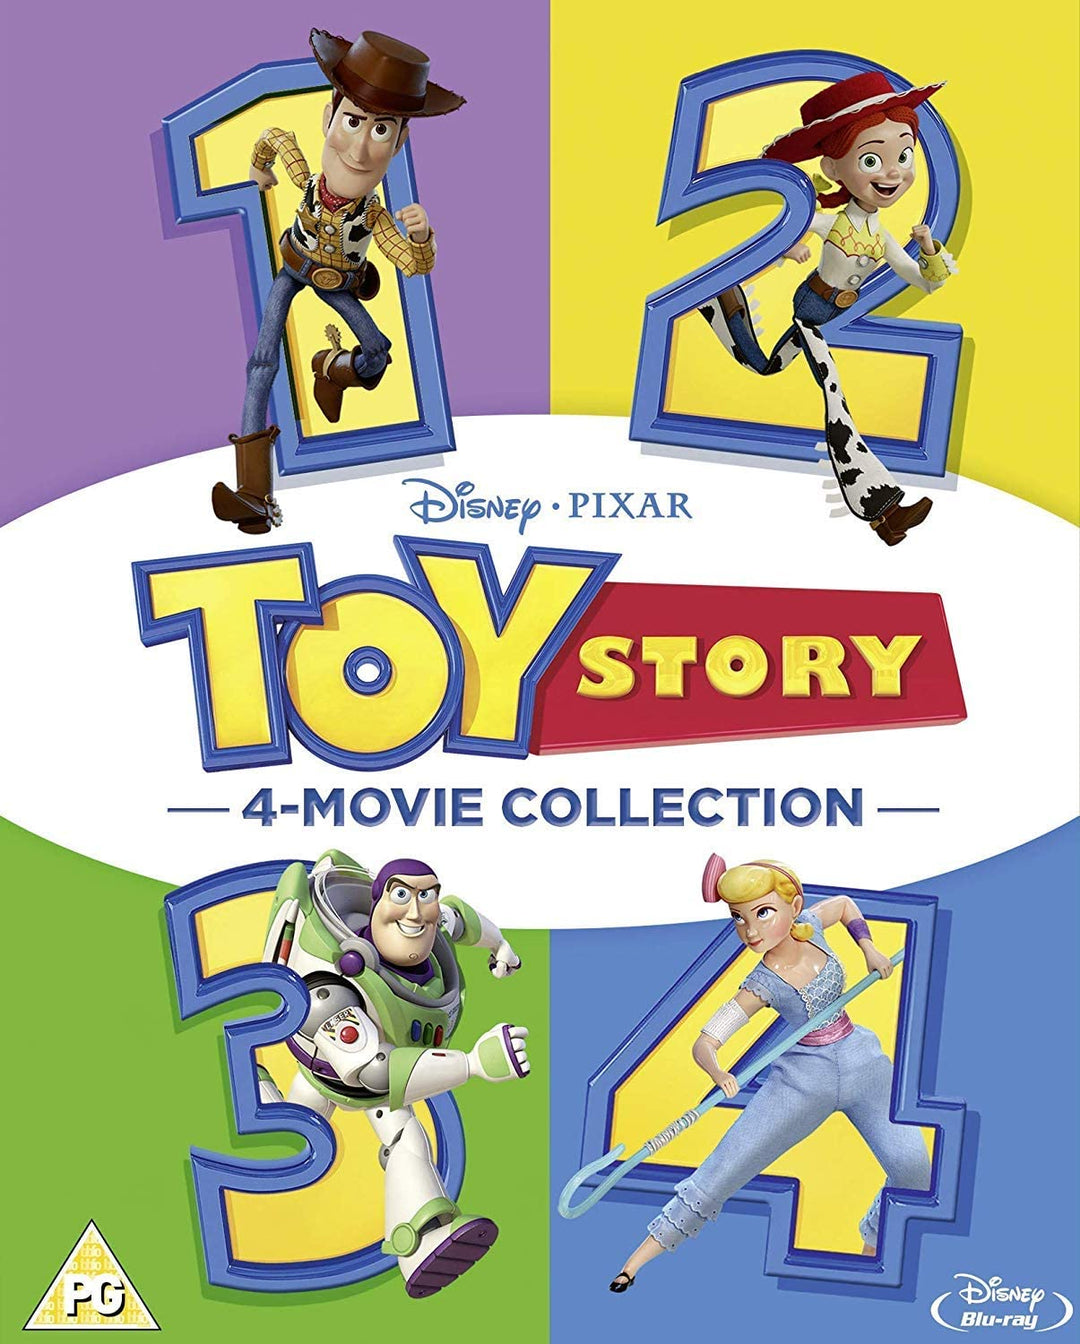 Disfraz Toy Story Woody Disney - Comprar en NewToys